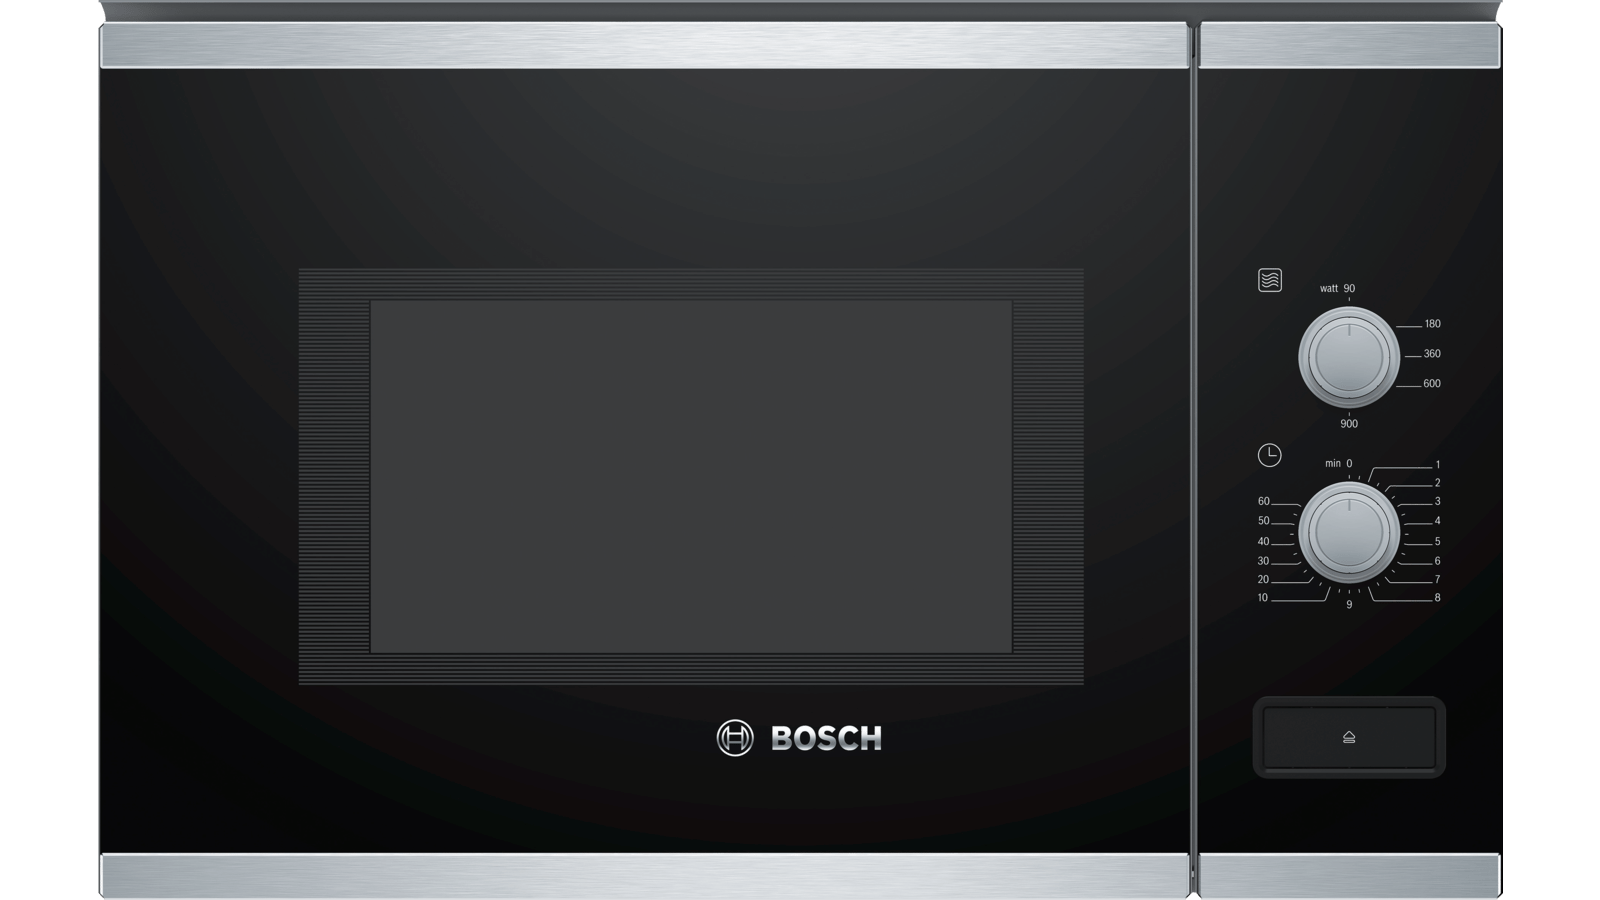 Bosch menager pose enc. BFL550MS0, MICRO-ONDES ENCASTRABLE 25L INOX